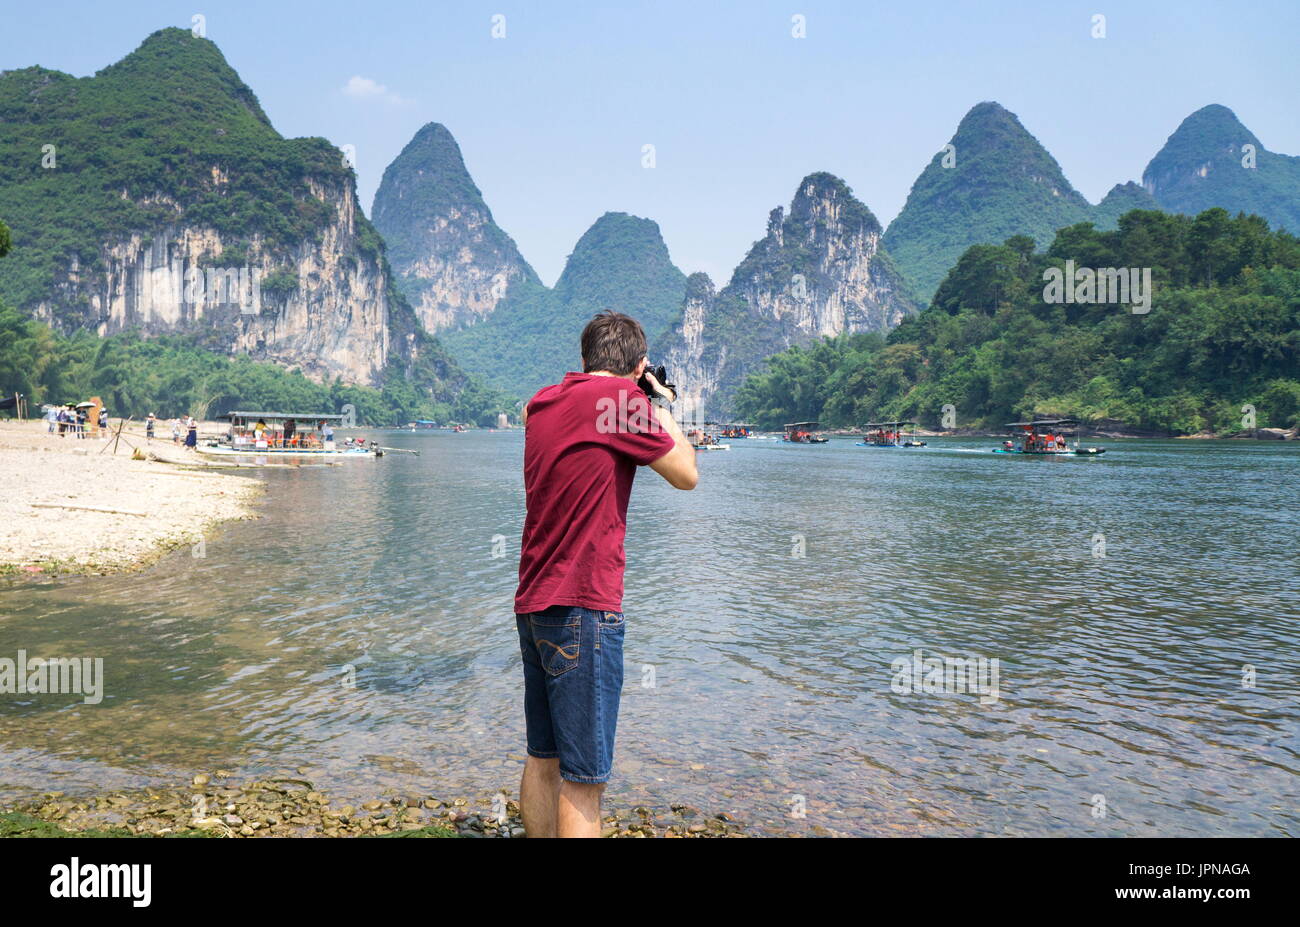 Man photographing scenery of the Li river in Yangshuo, China Stock Photo